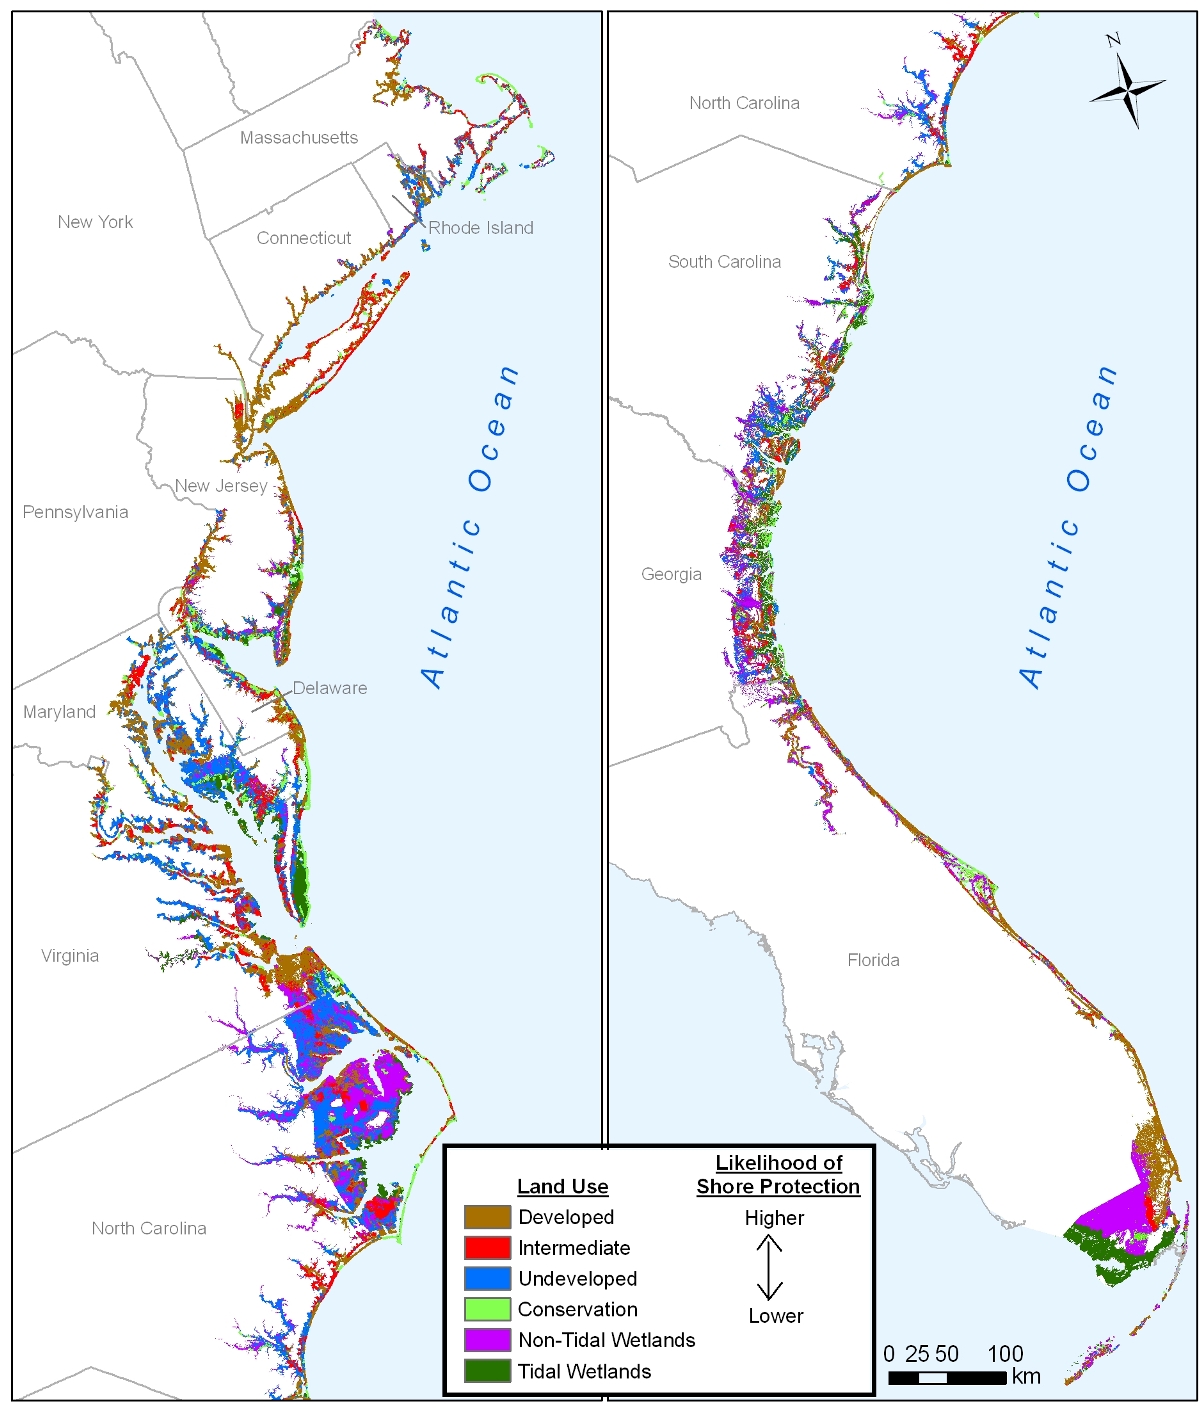 Atlantic Coast sea level rise planning map